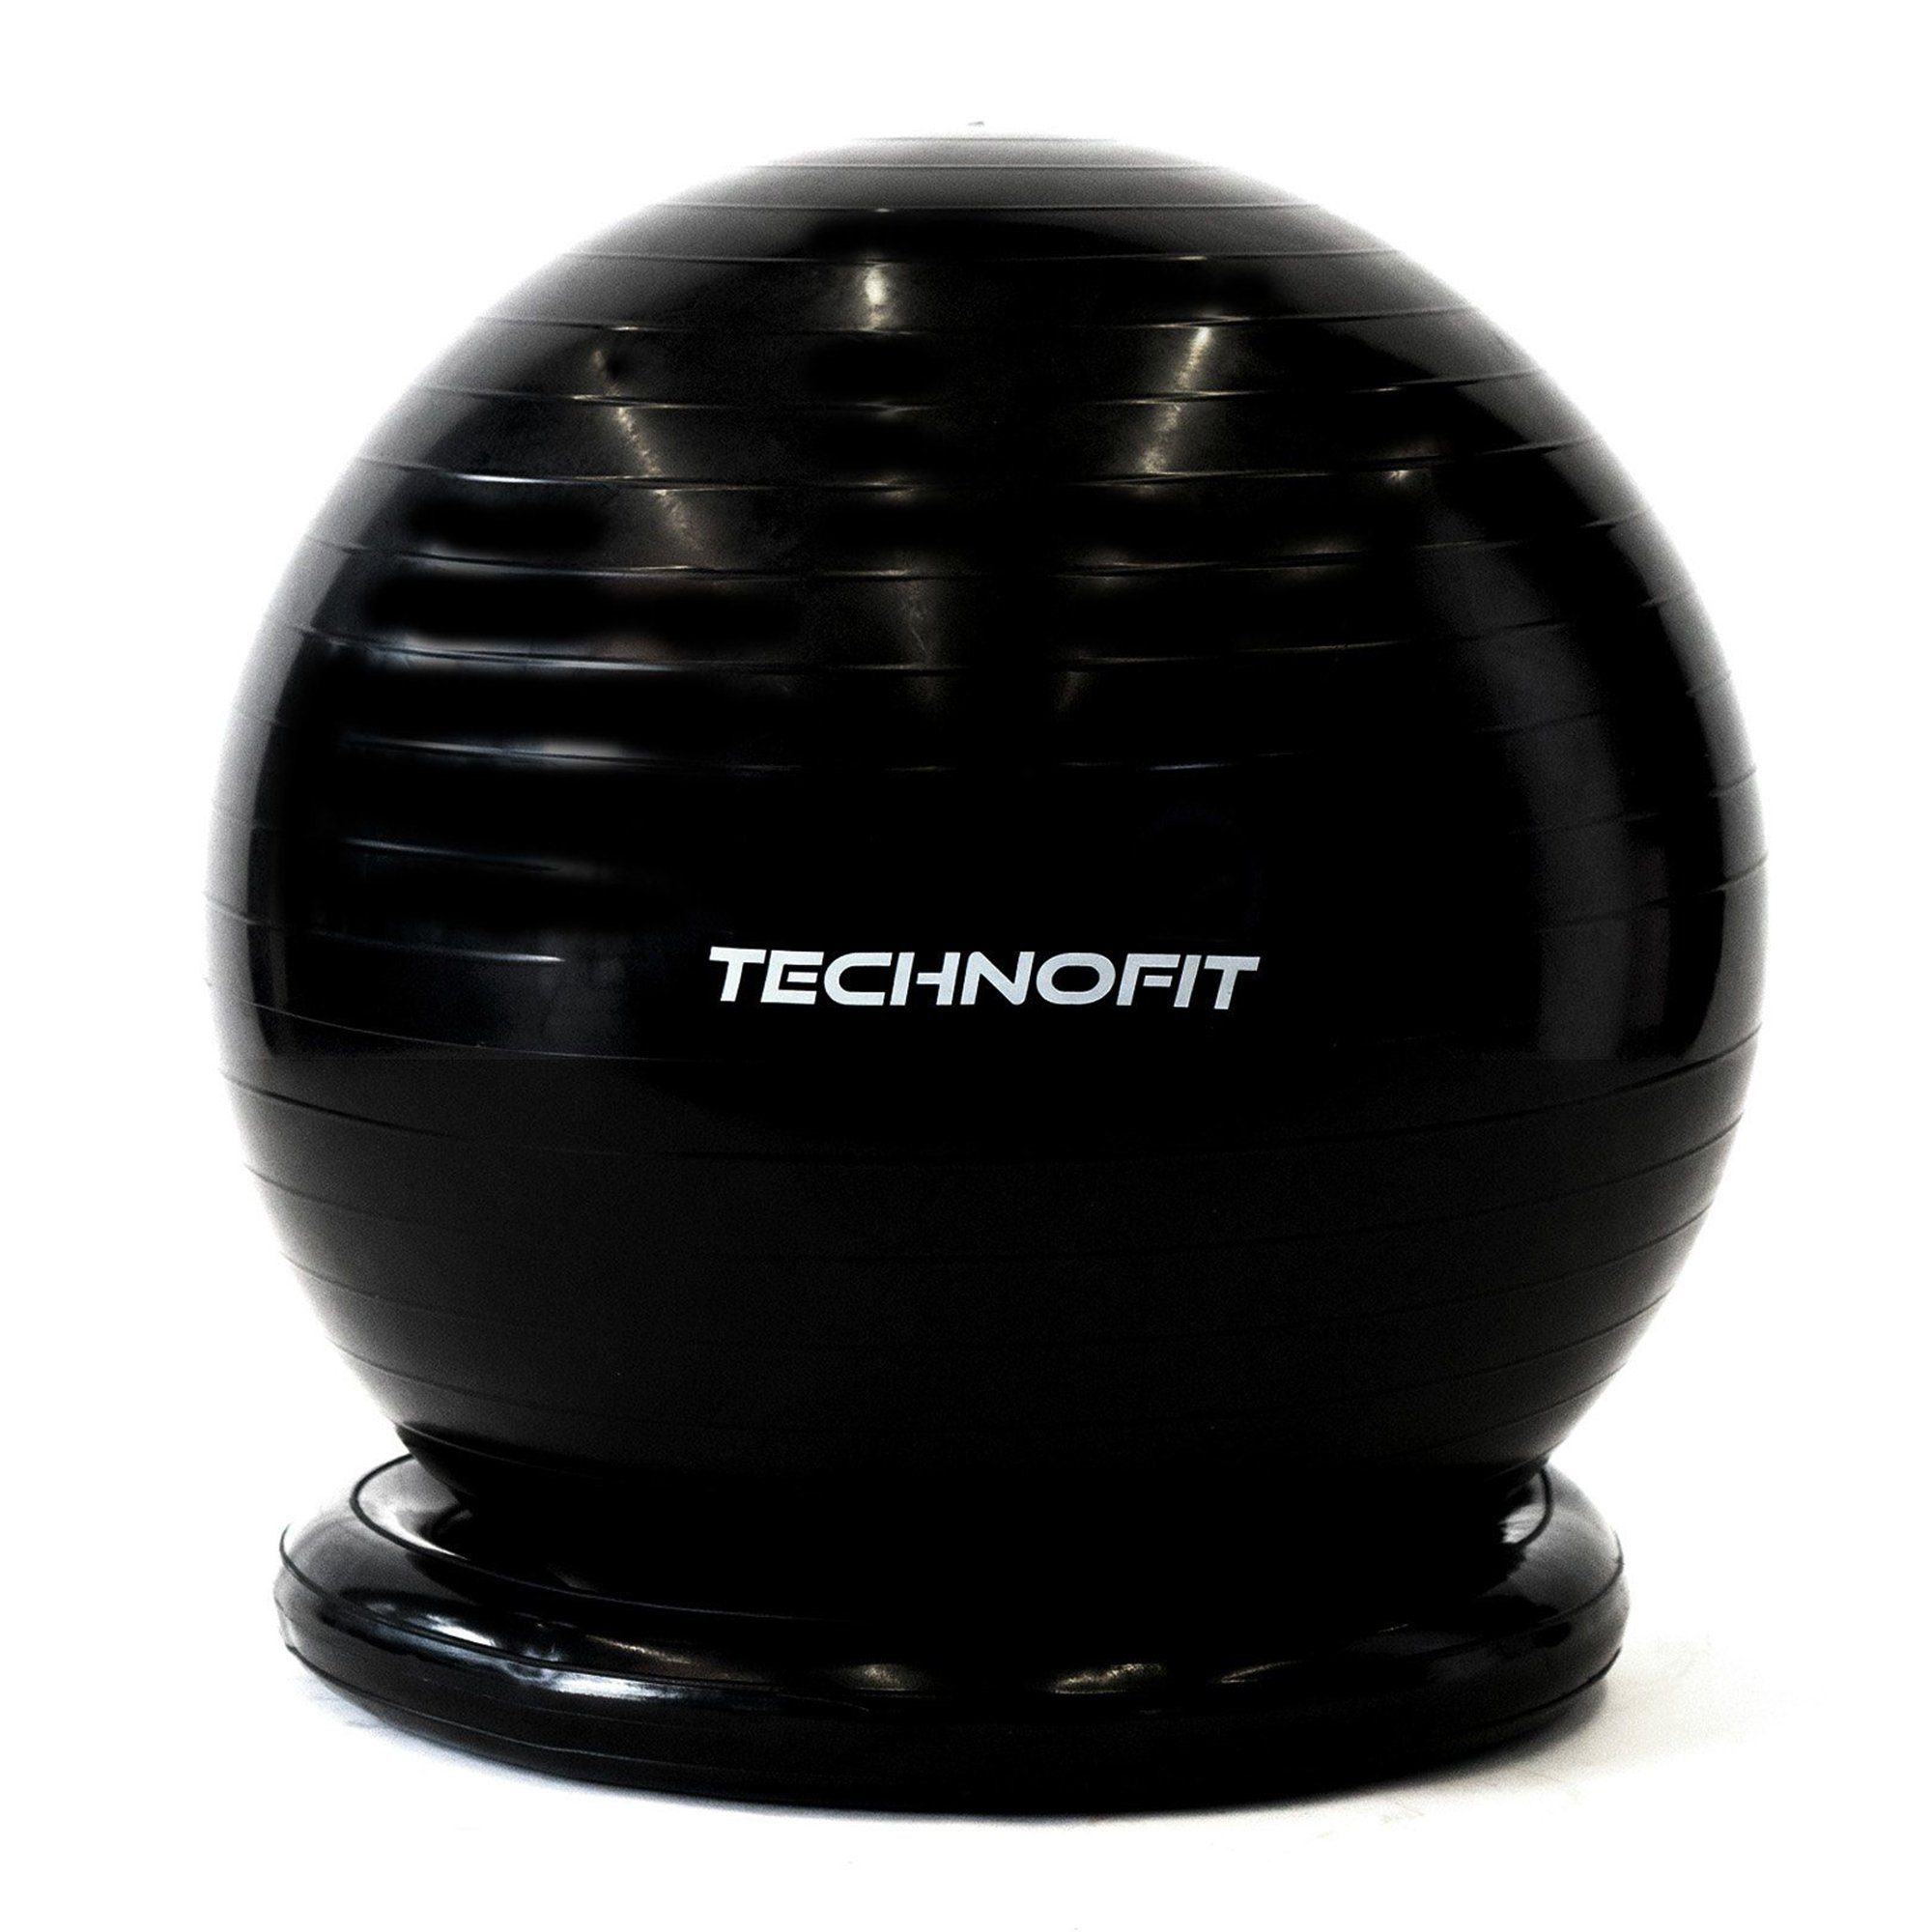 Technofit Gymnastikball Sitzball Anti-Rutsch Yoga Design Ball, Fitnessball rutschfester Ballschale, mit Basis mit